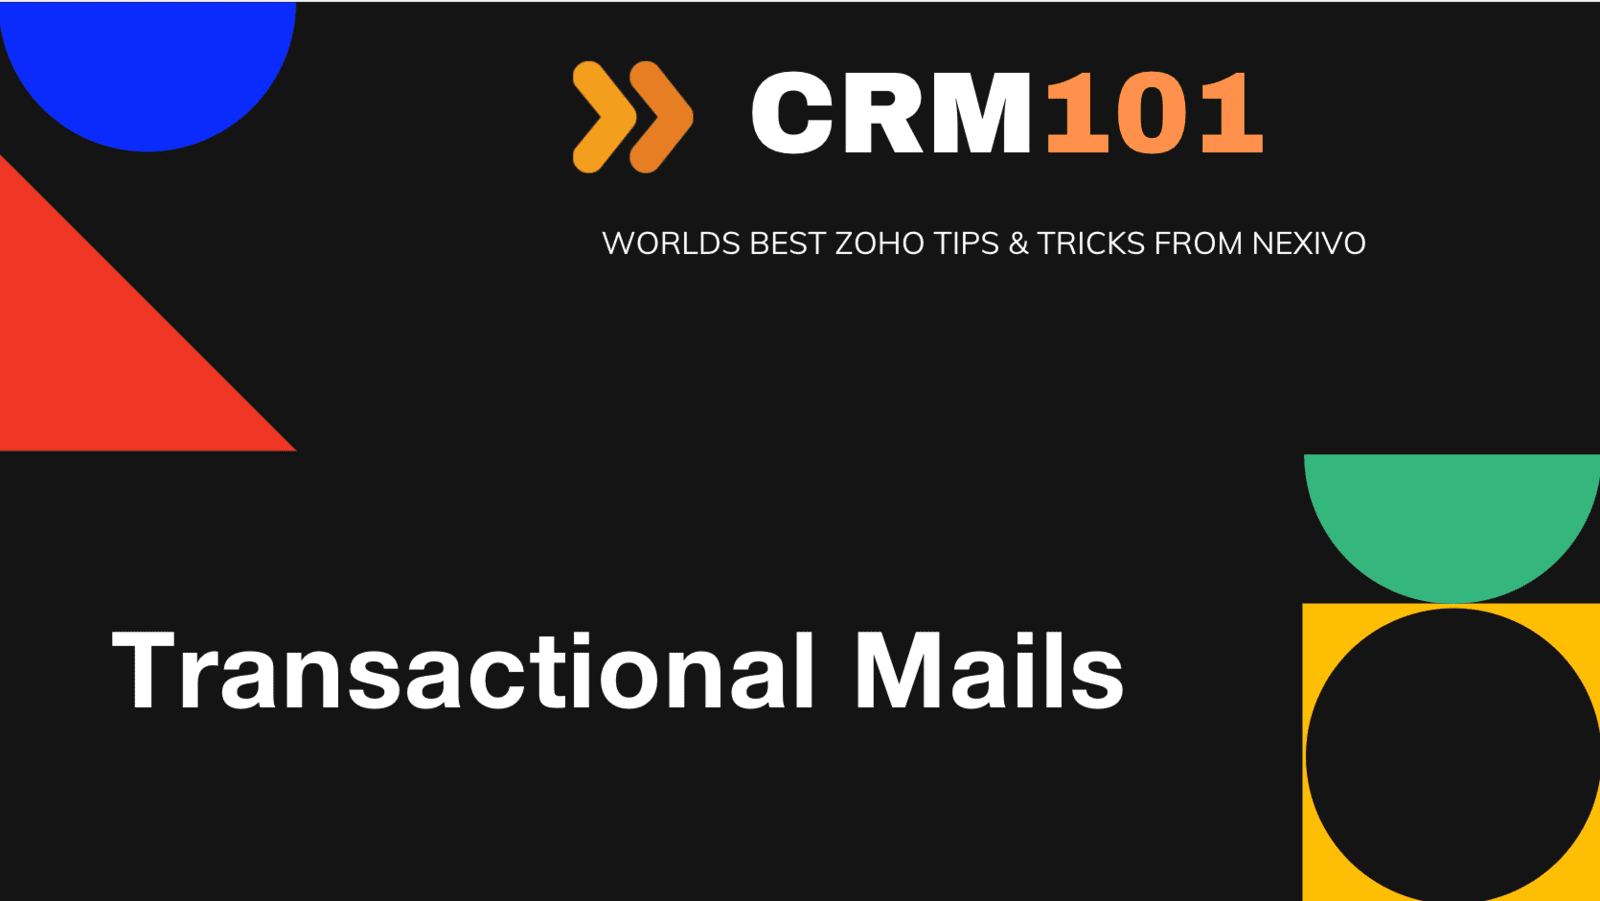 How to send transactional mails using Zoho CRM?